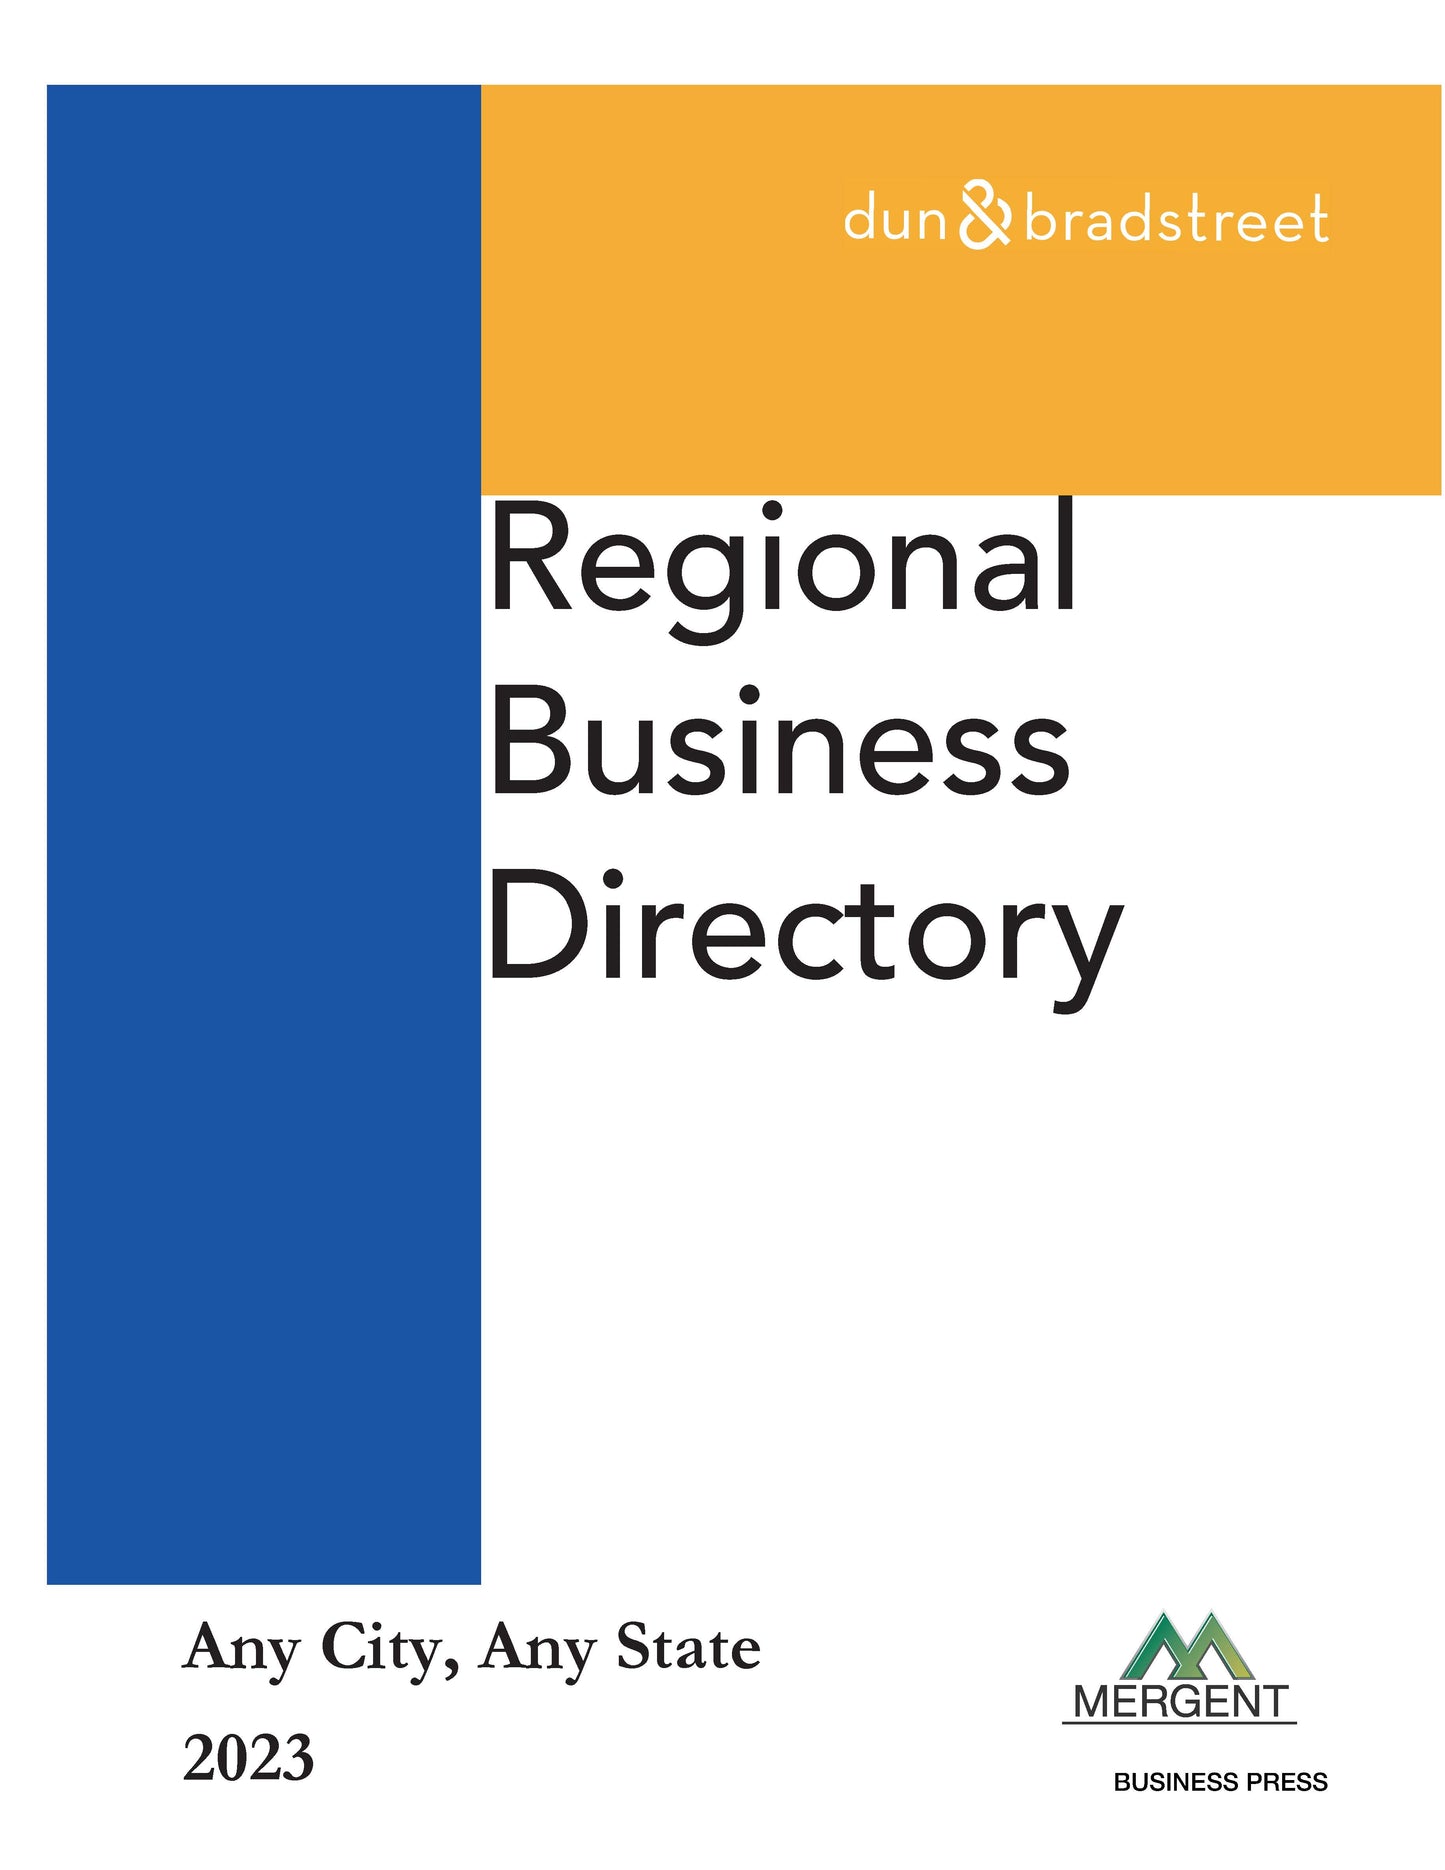 Regional Business Directory - Los Angeles Suburb